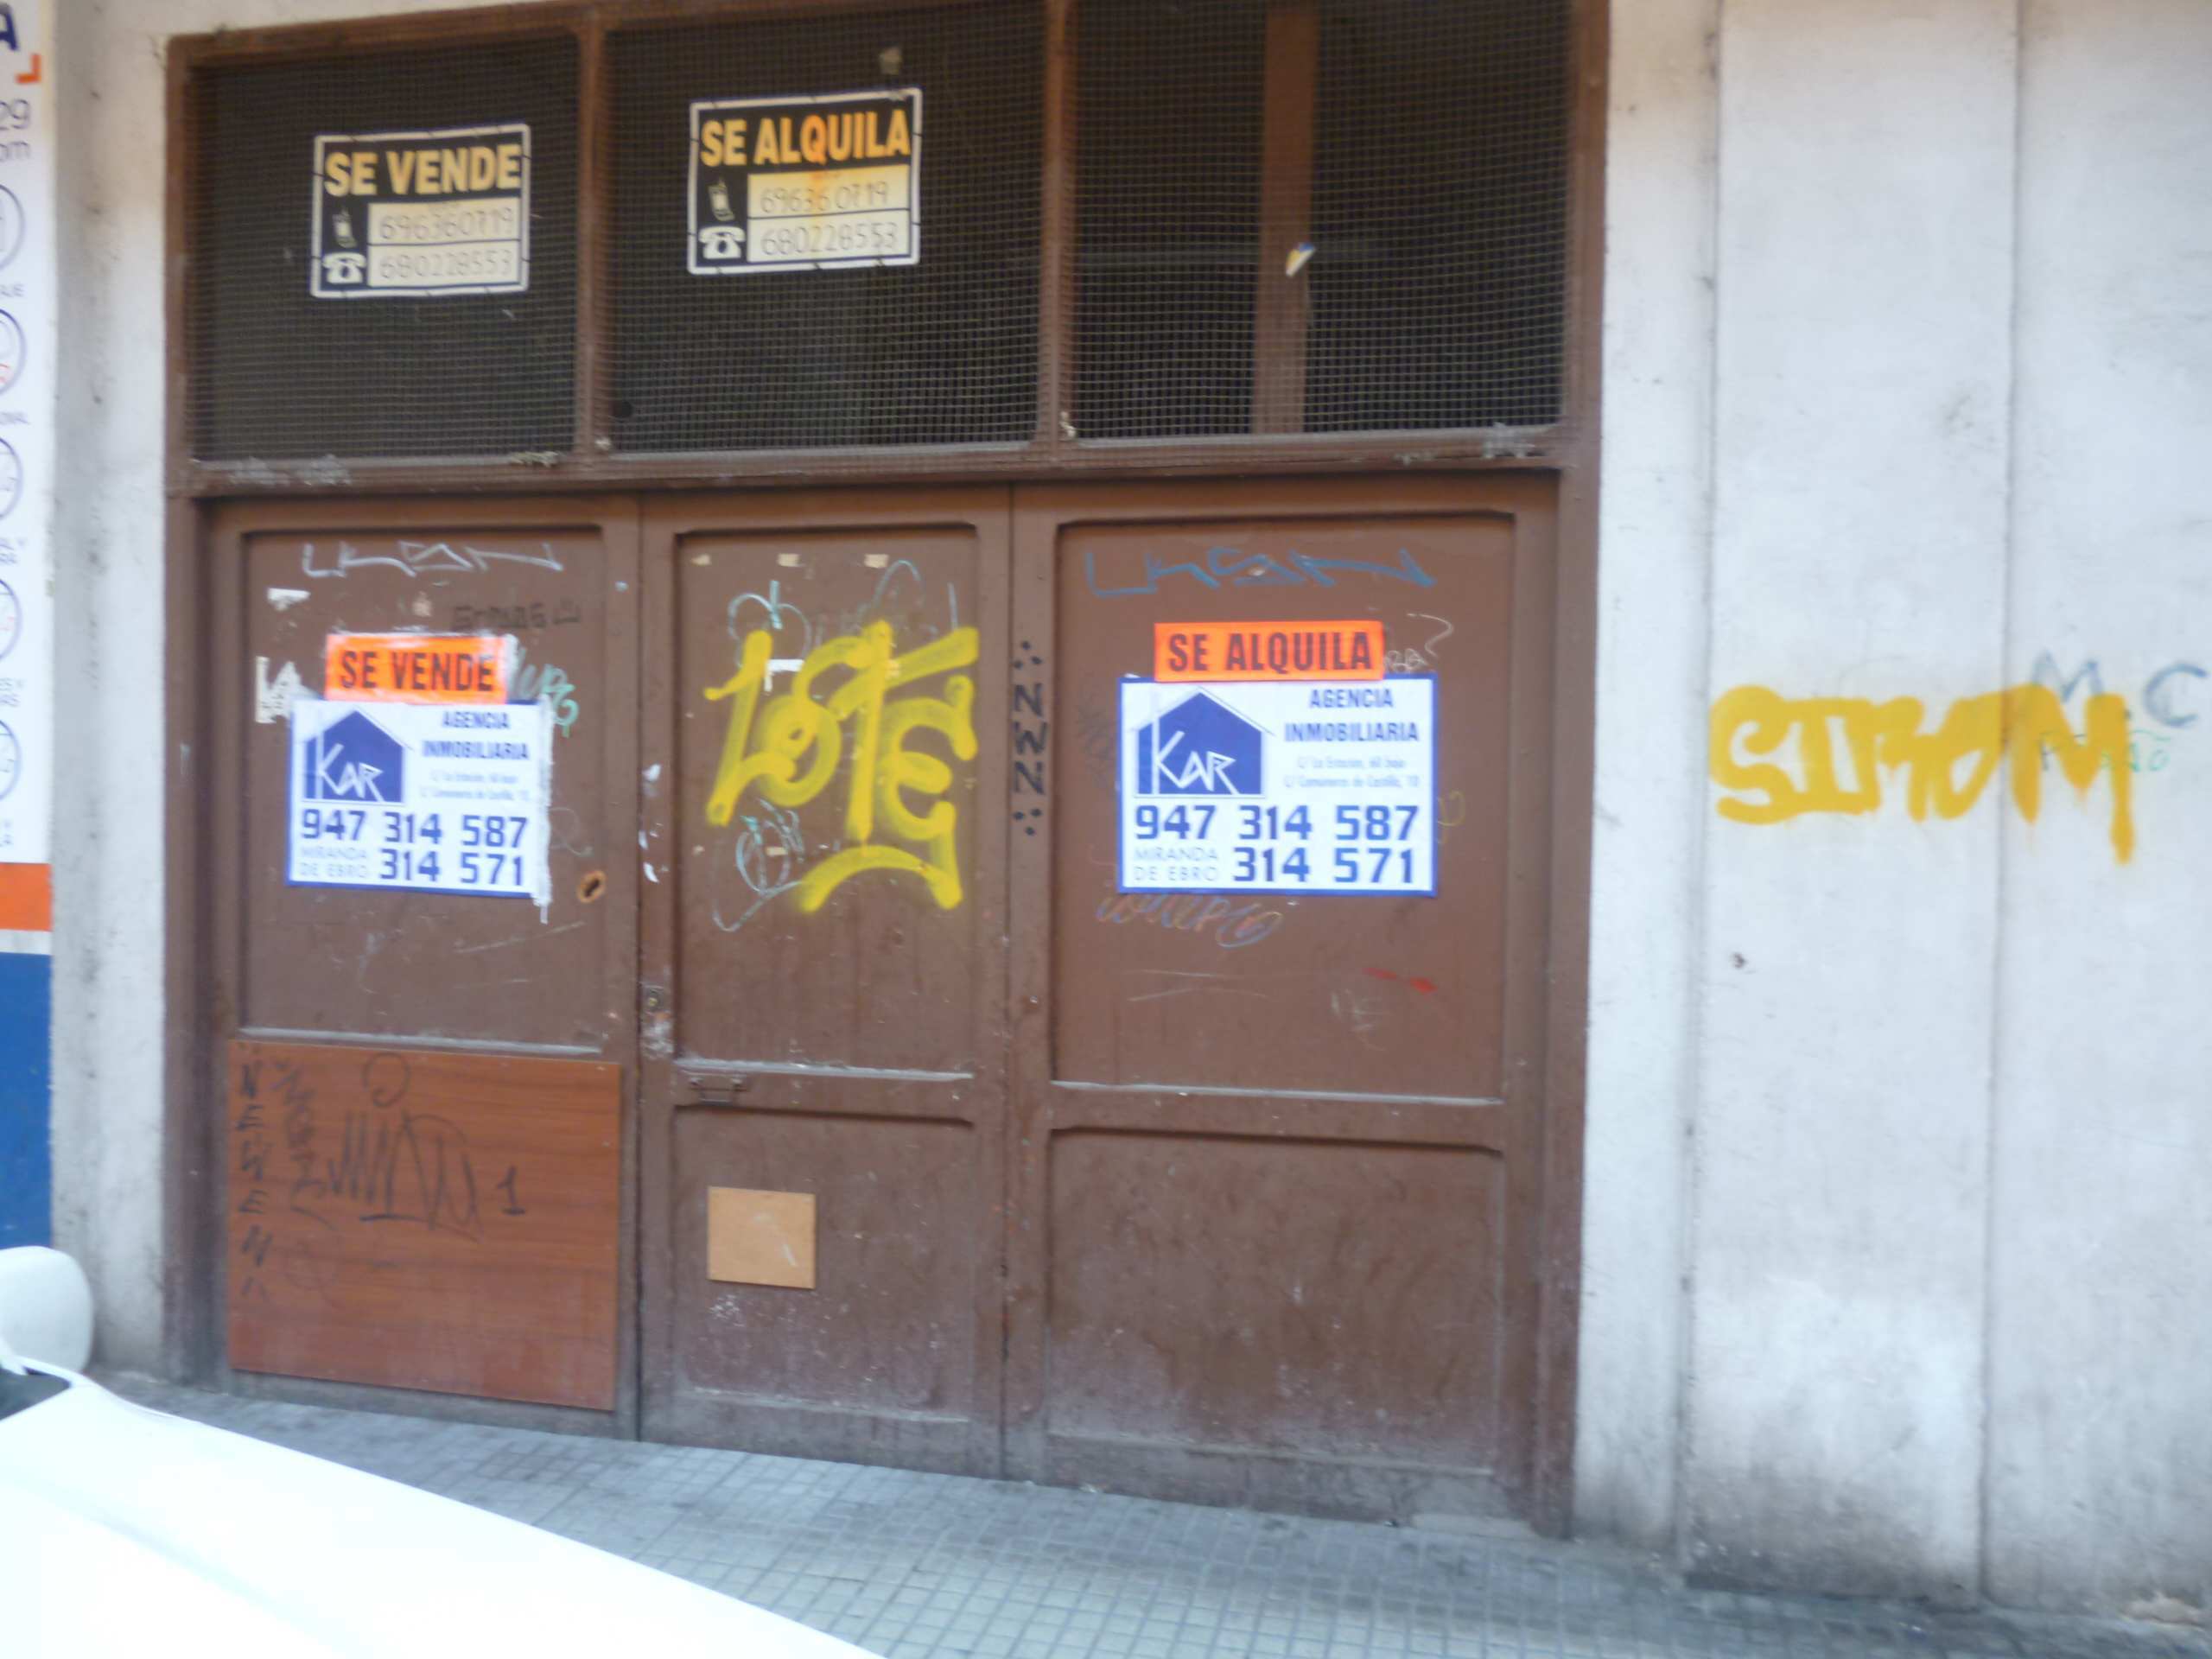 Premises for sale or rent in Miranda de Ebro